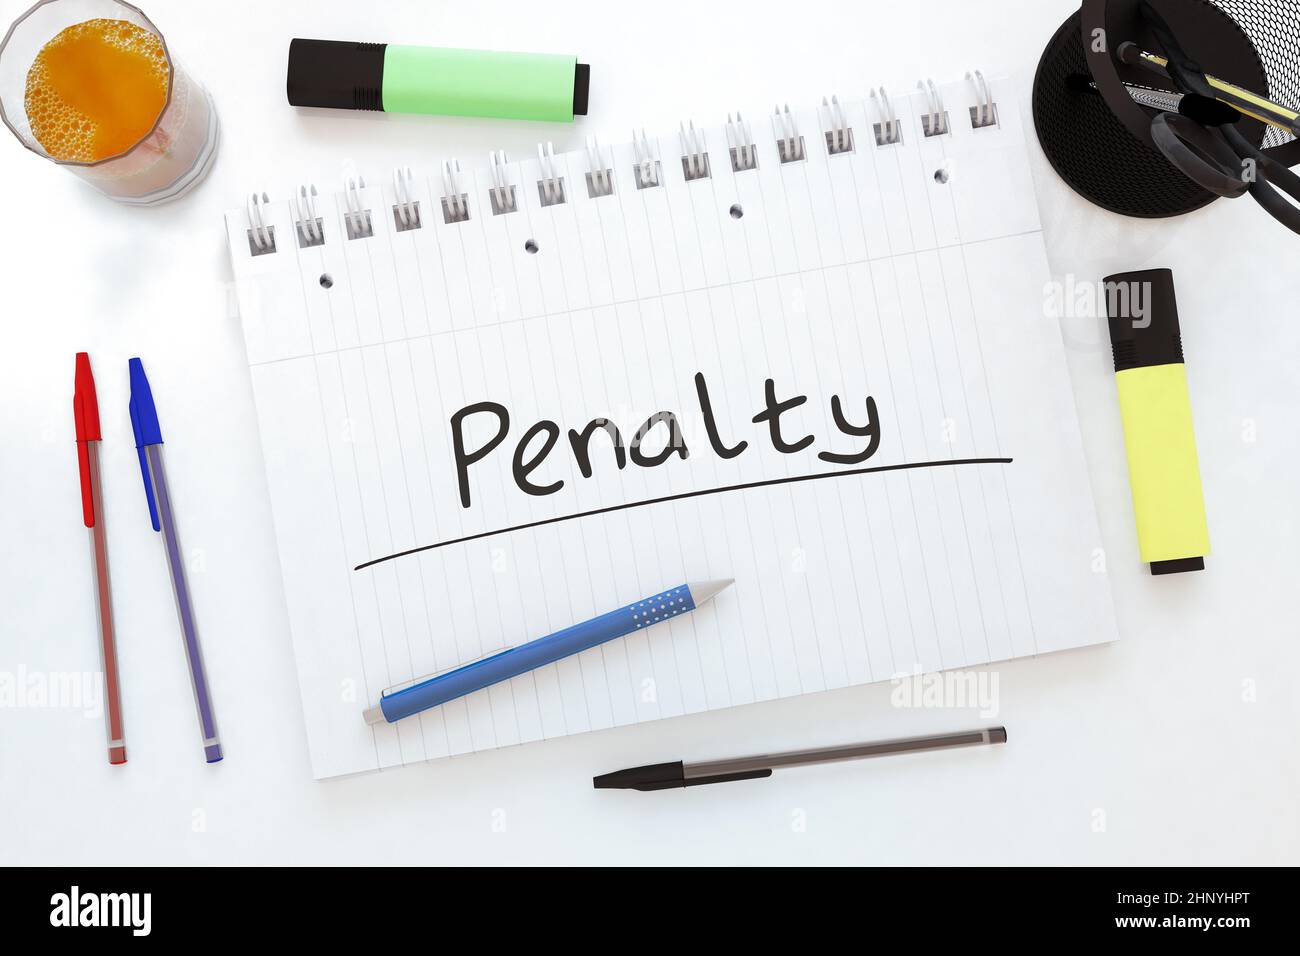 Penalty - handwritten text in a notebook on a desk - 3d render illustration. Stock Photo